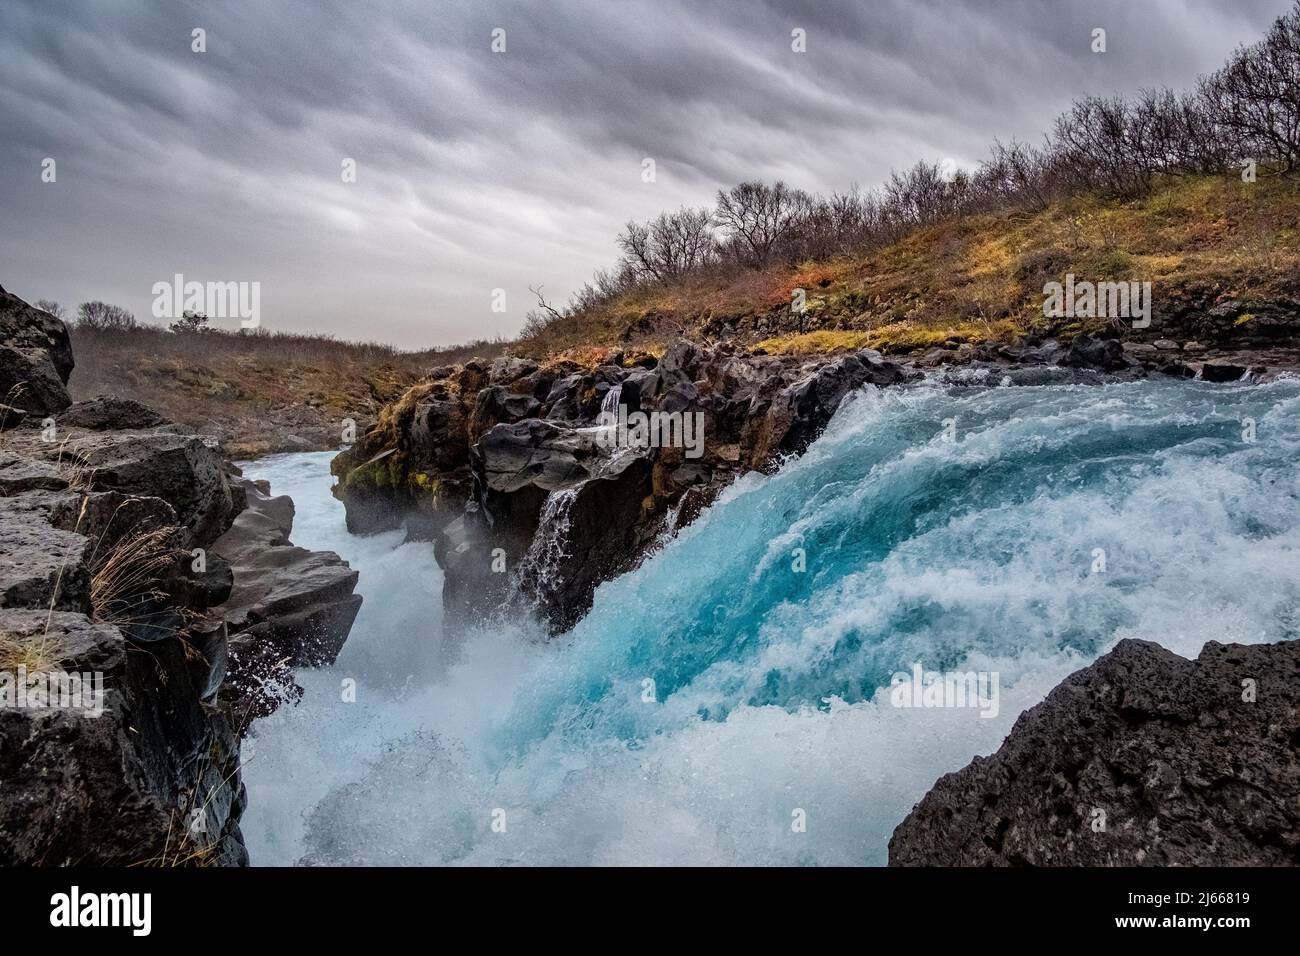 Wasserfall Hlauptungufoss im Golden Circle, Isola - una cascata blu chiamata 'Hlauptungufoss ' nel sud dell'Islanda. Foto Stock